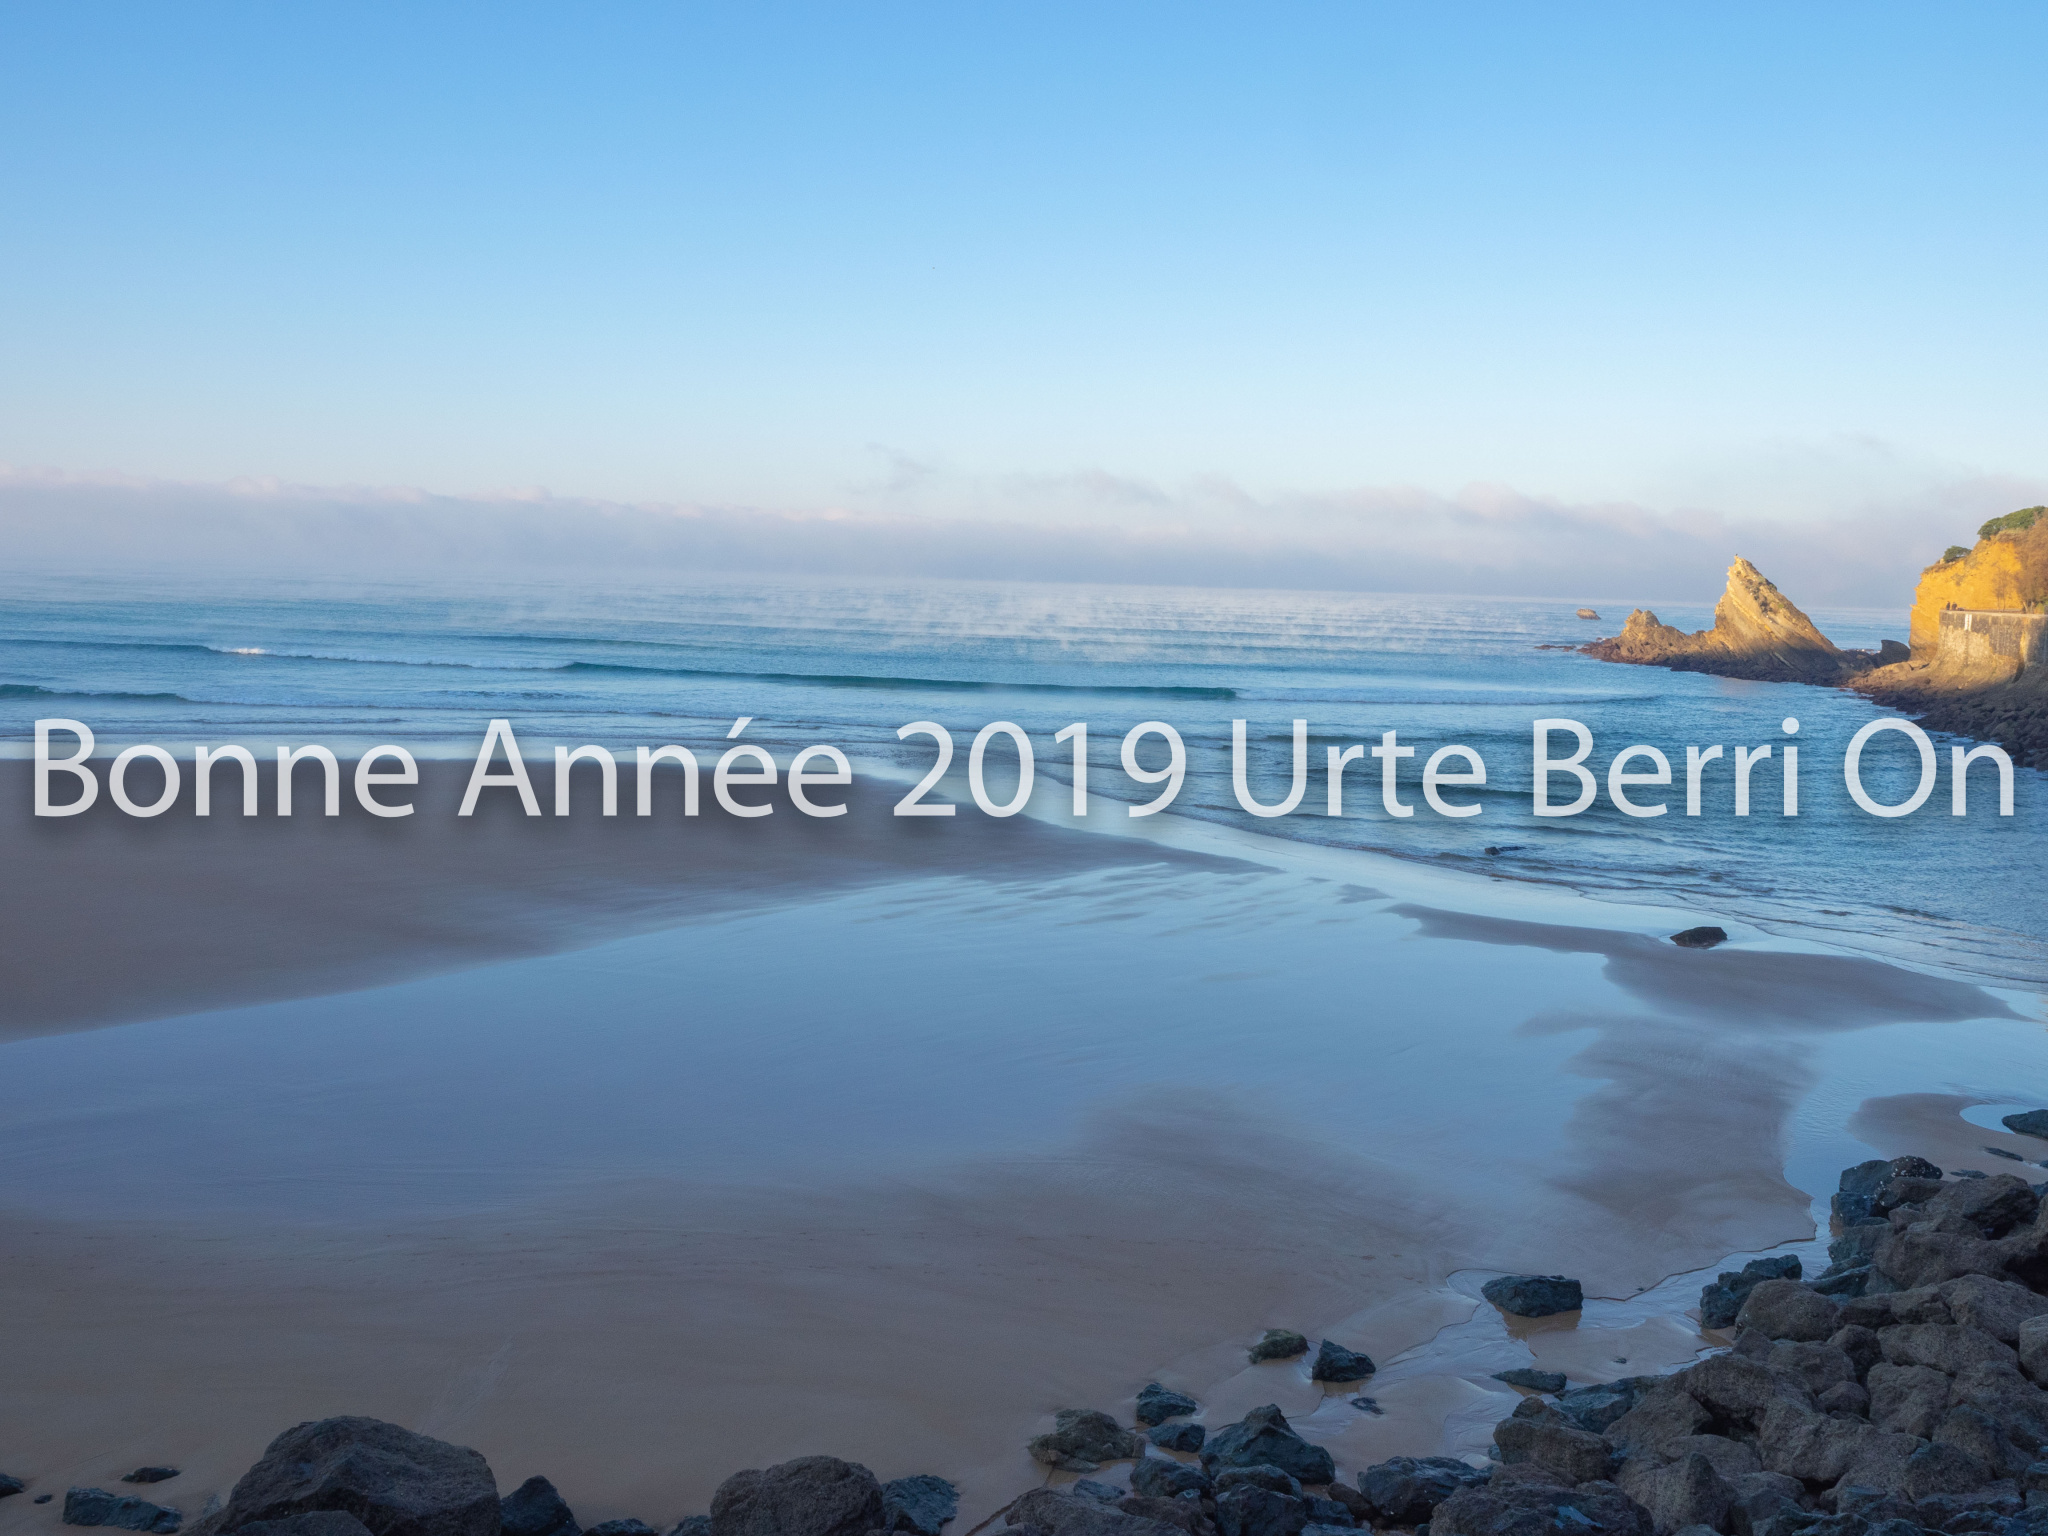 URTE BERRI ON 2019 / BONNE ANNEE 2019